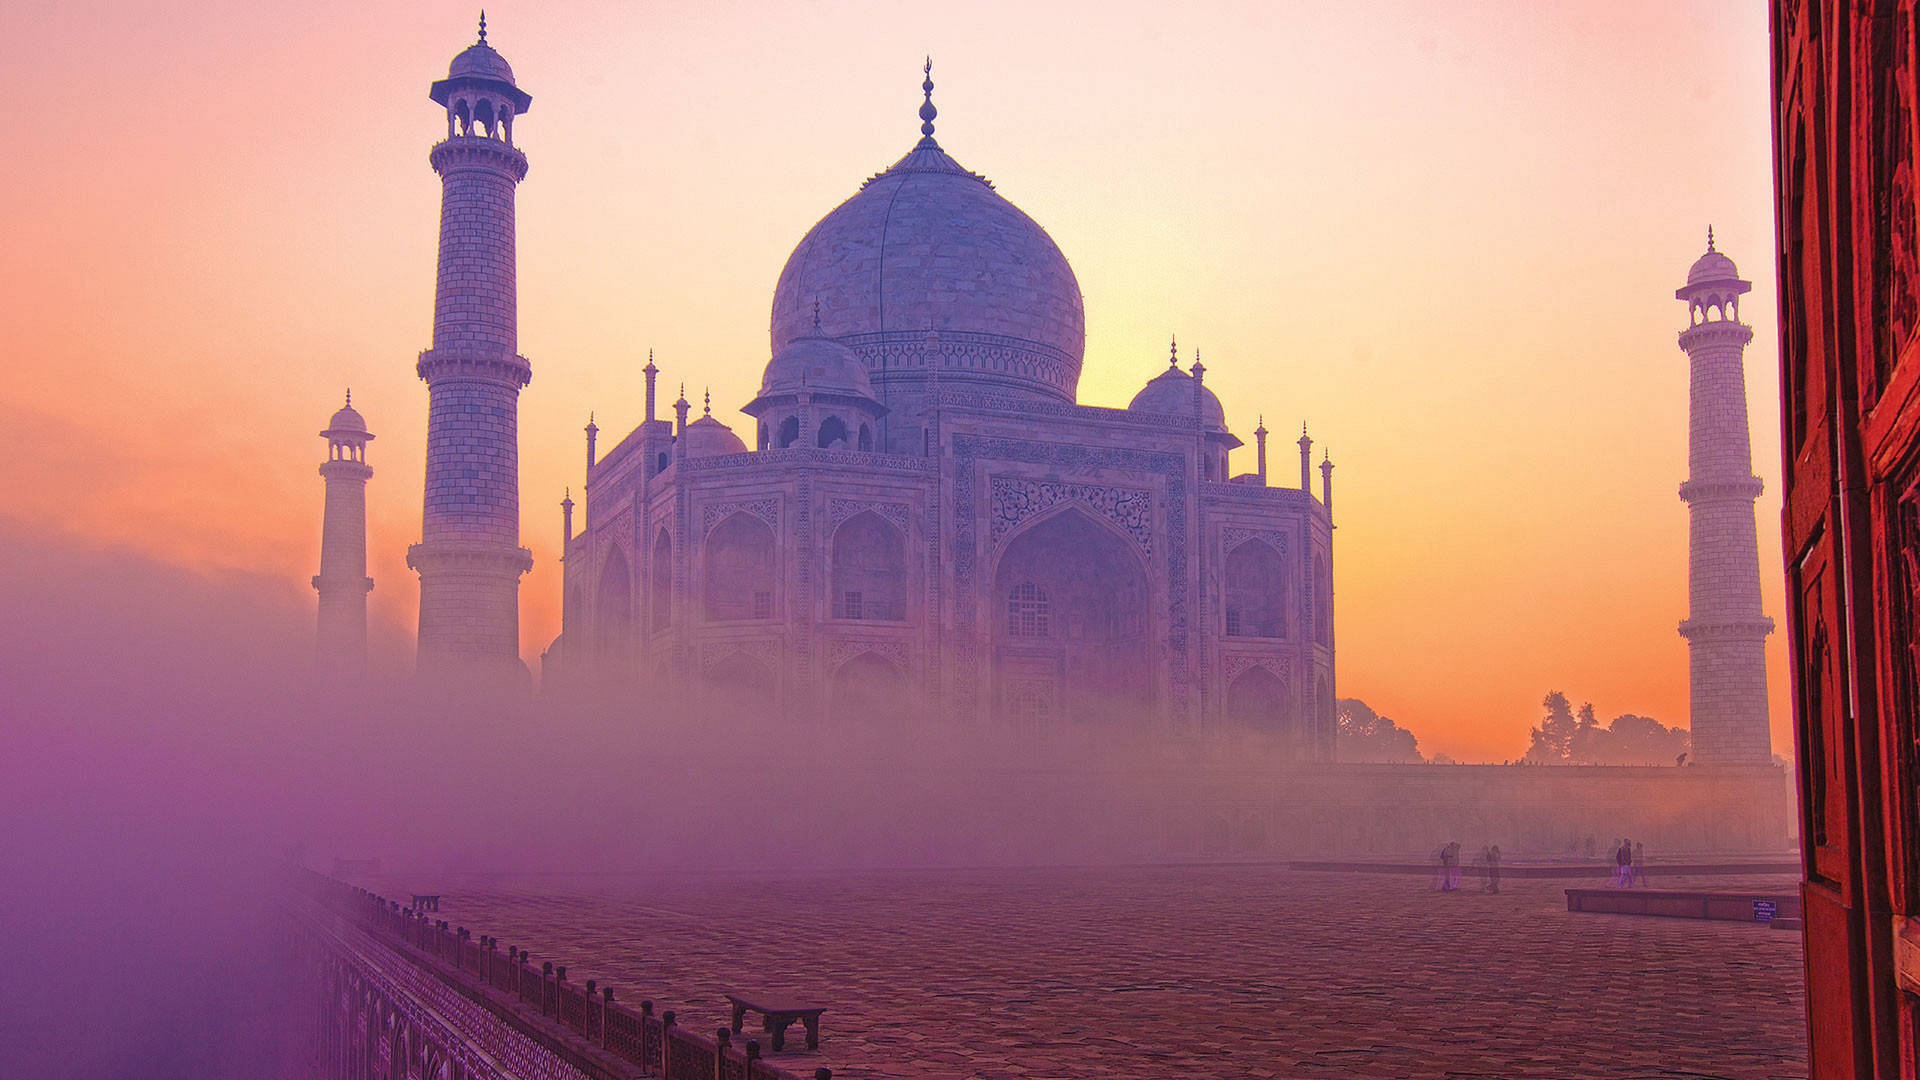 Delhi Taj Mahal Fog Picture